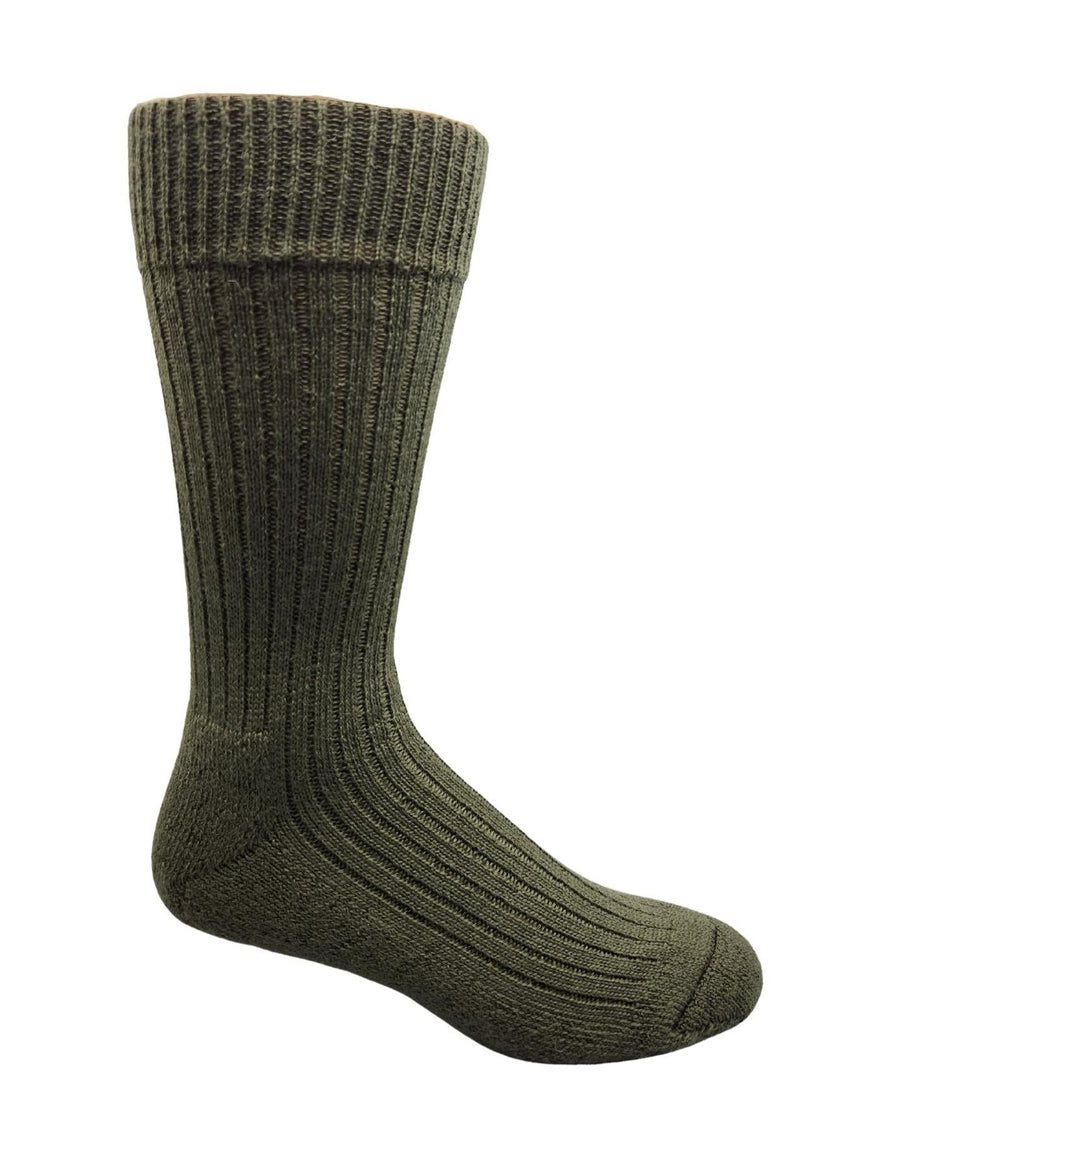 Heavy Wool Winter Boot Thermal Socks, CLEARANCE, J.B. Field's